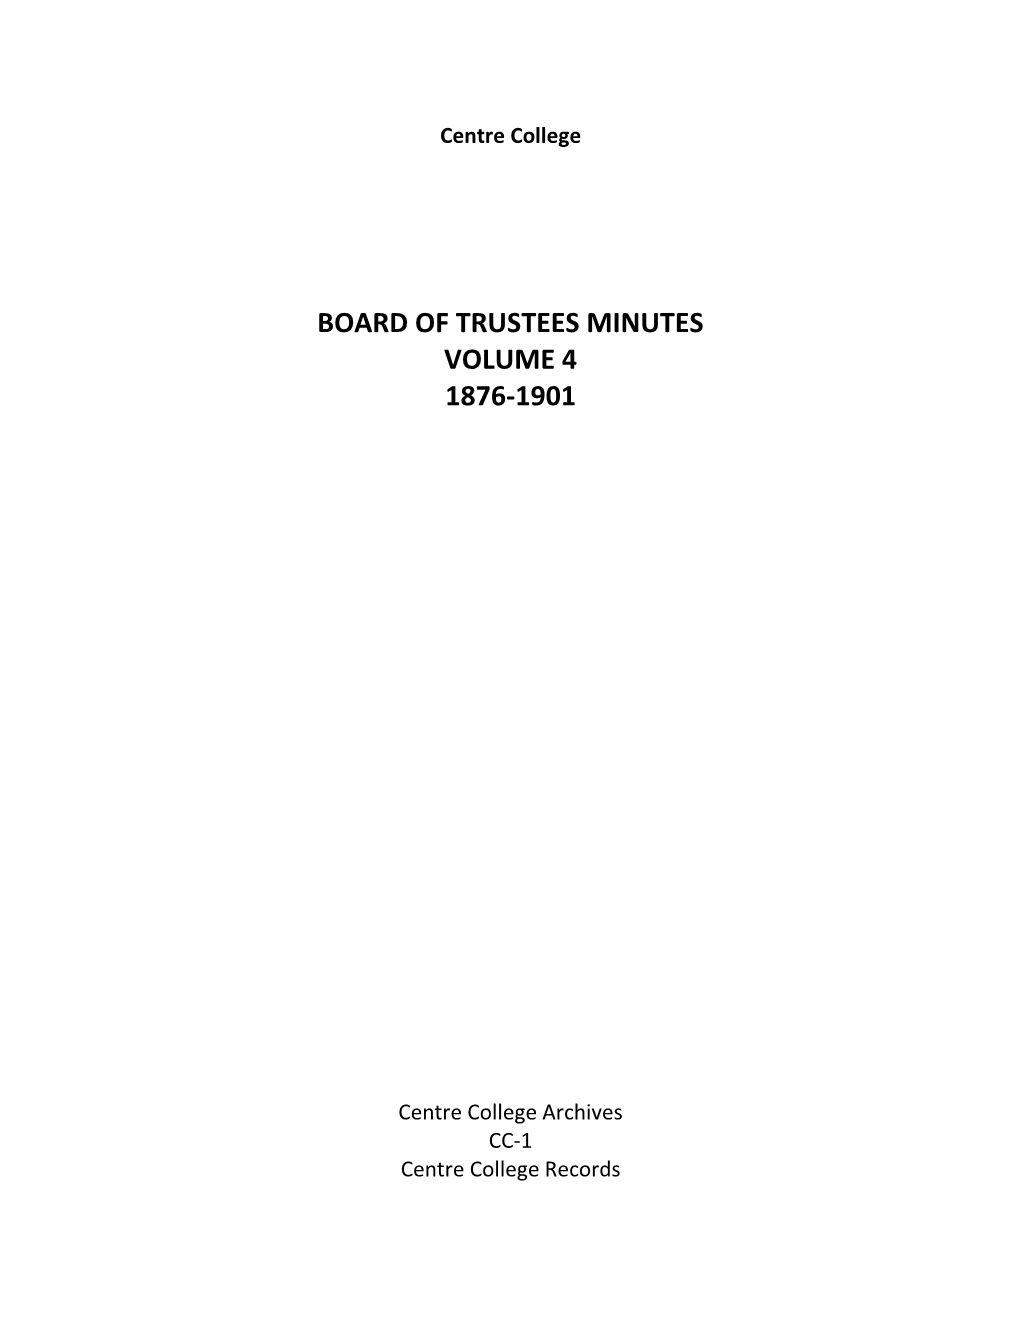 Board of Trustees Minutes Volume 4 1876-1901